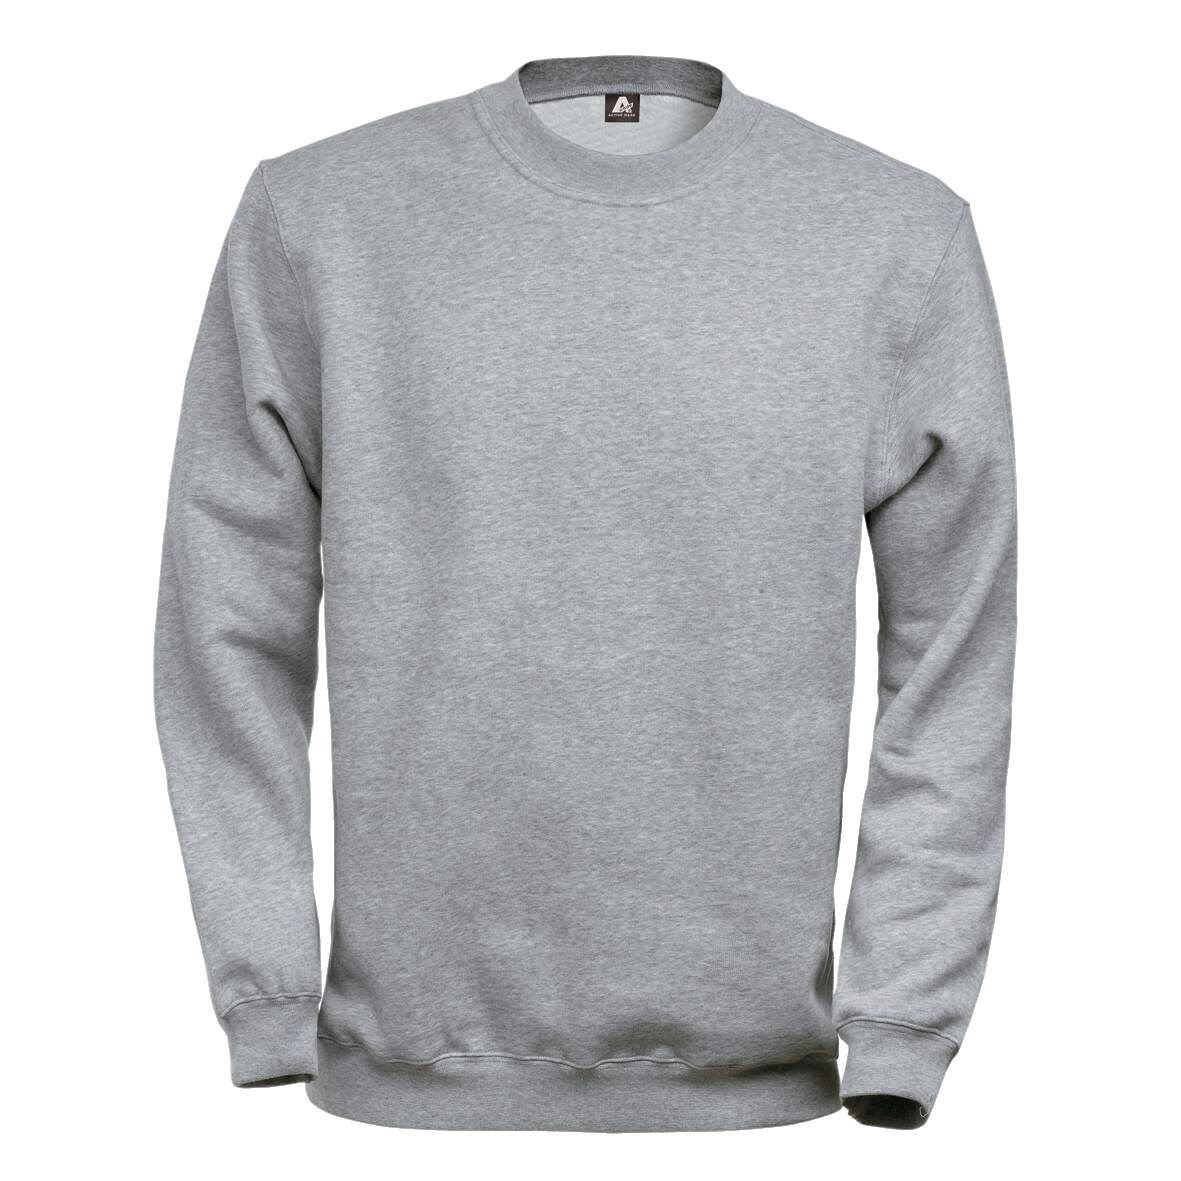 1181272 - Sweatshirt grau meliert 100225